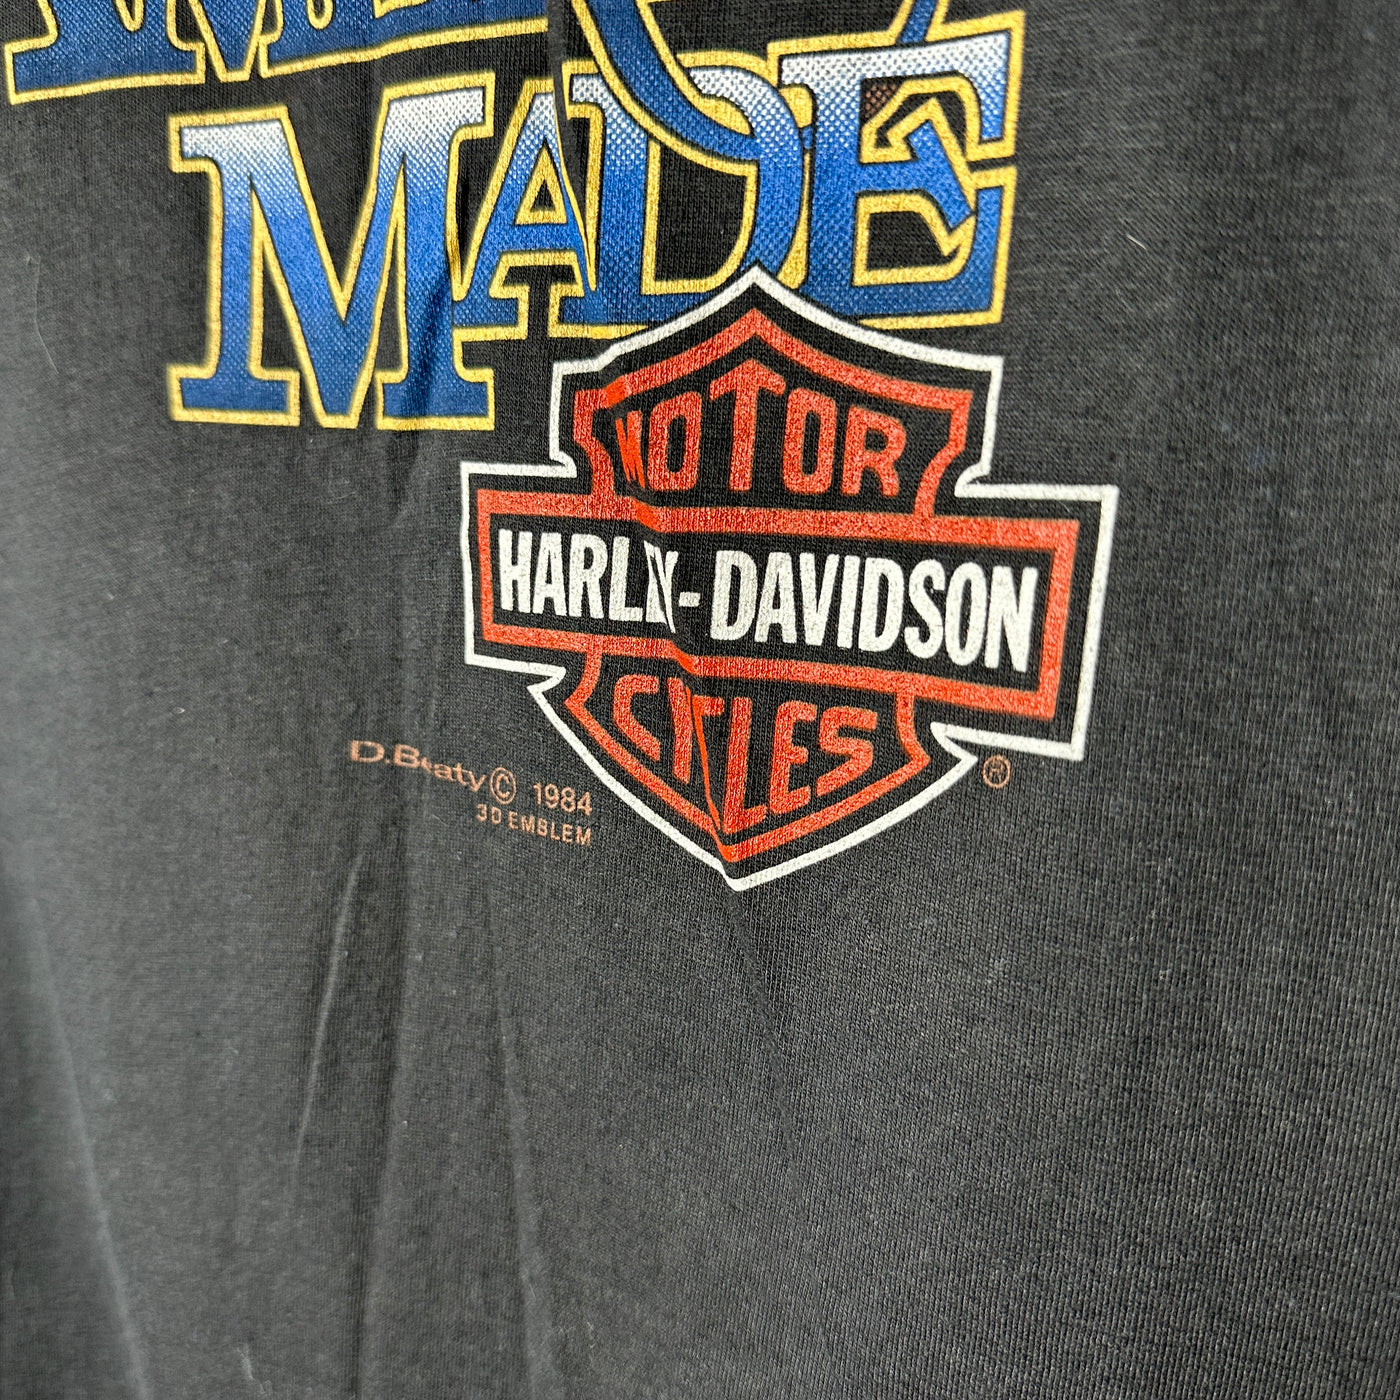 '84 Harley Davidson 3D Emblem "I Ride With Pride" T-shirt sz M